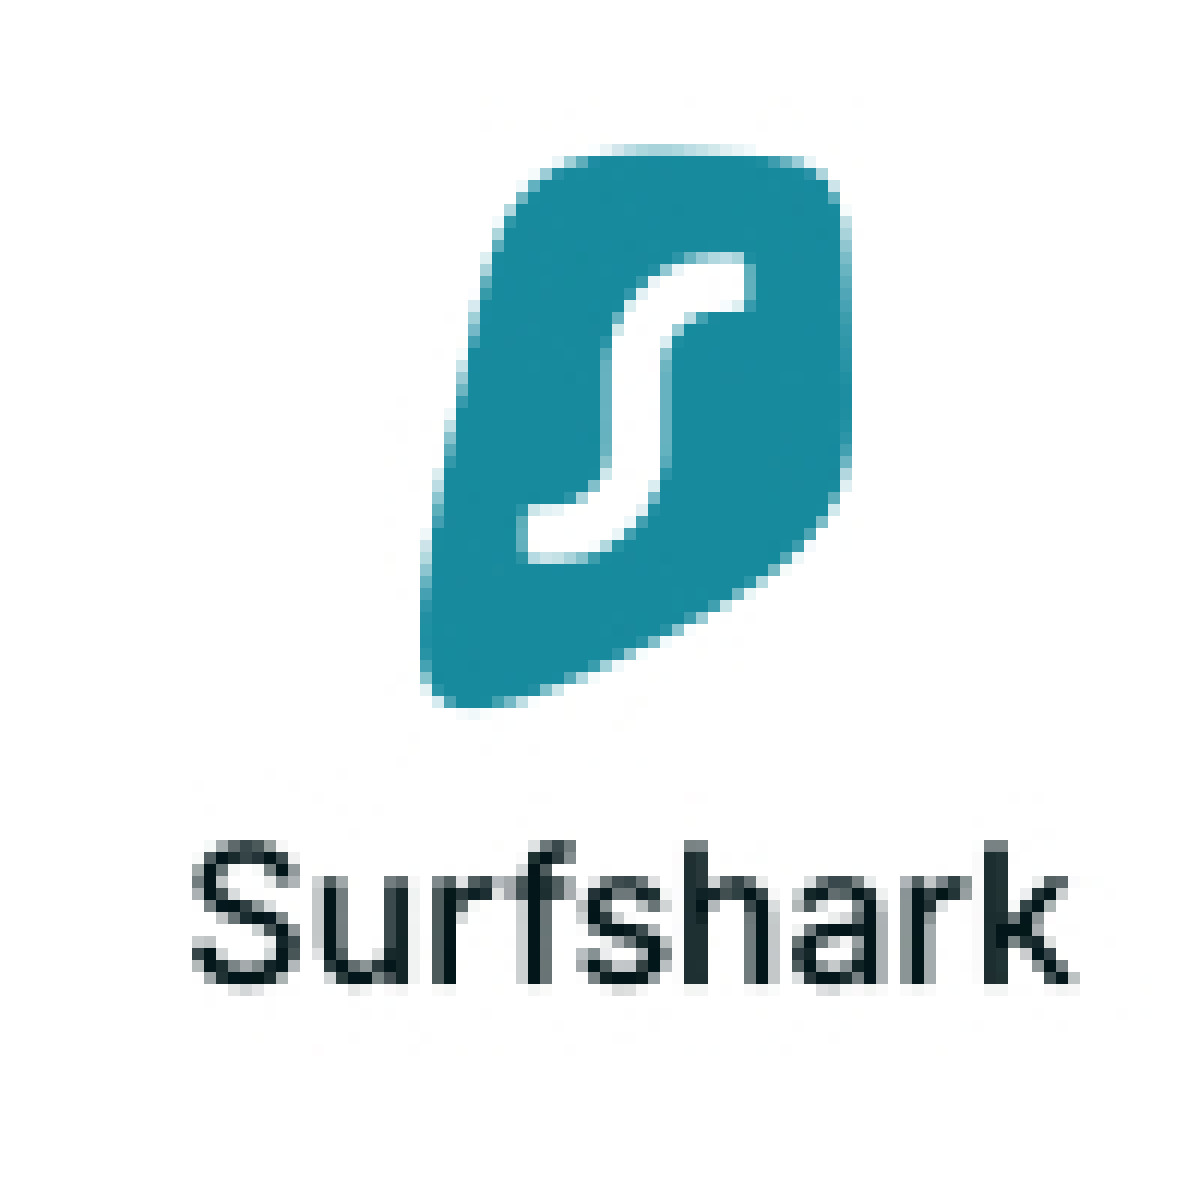 Surfshark antivirus logo